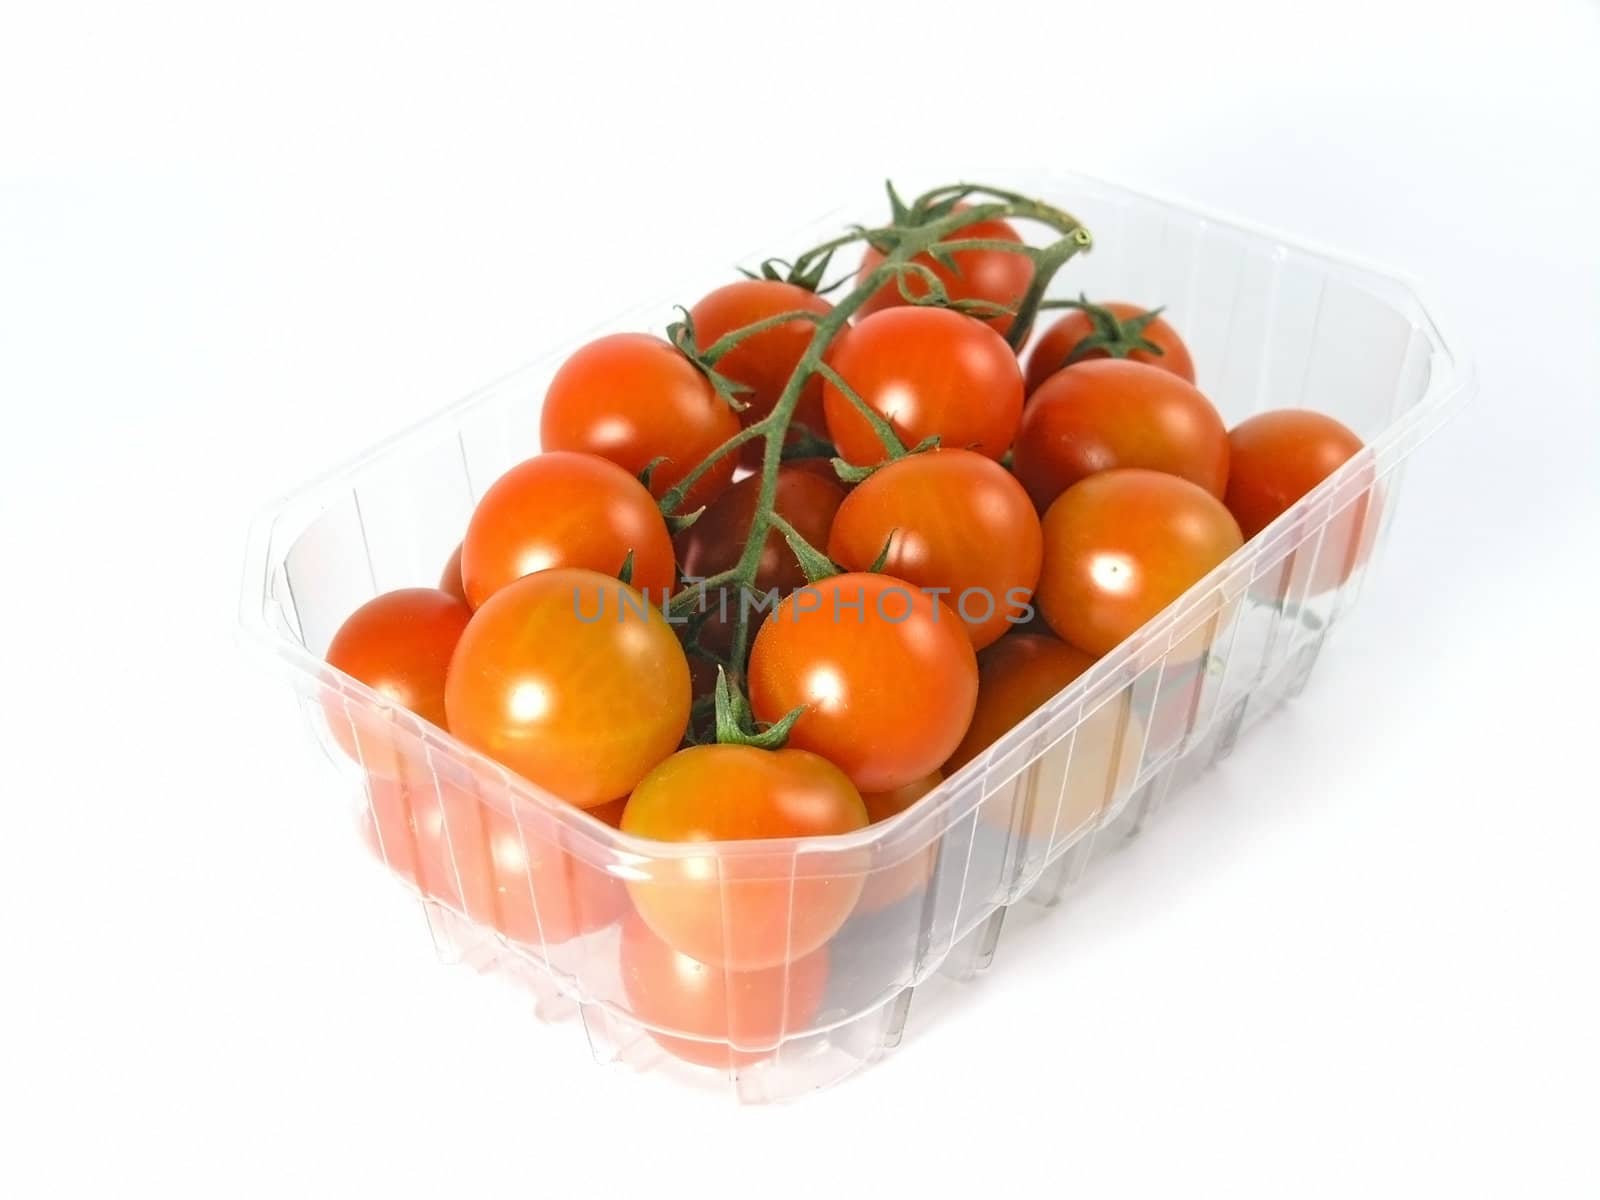 tomatoes by iwka